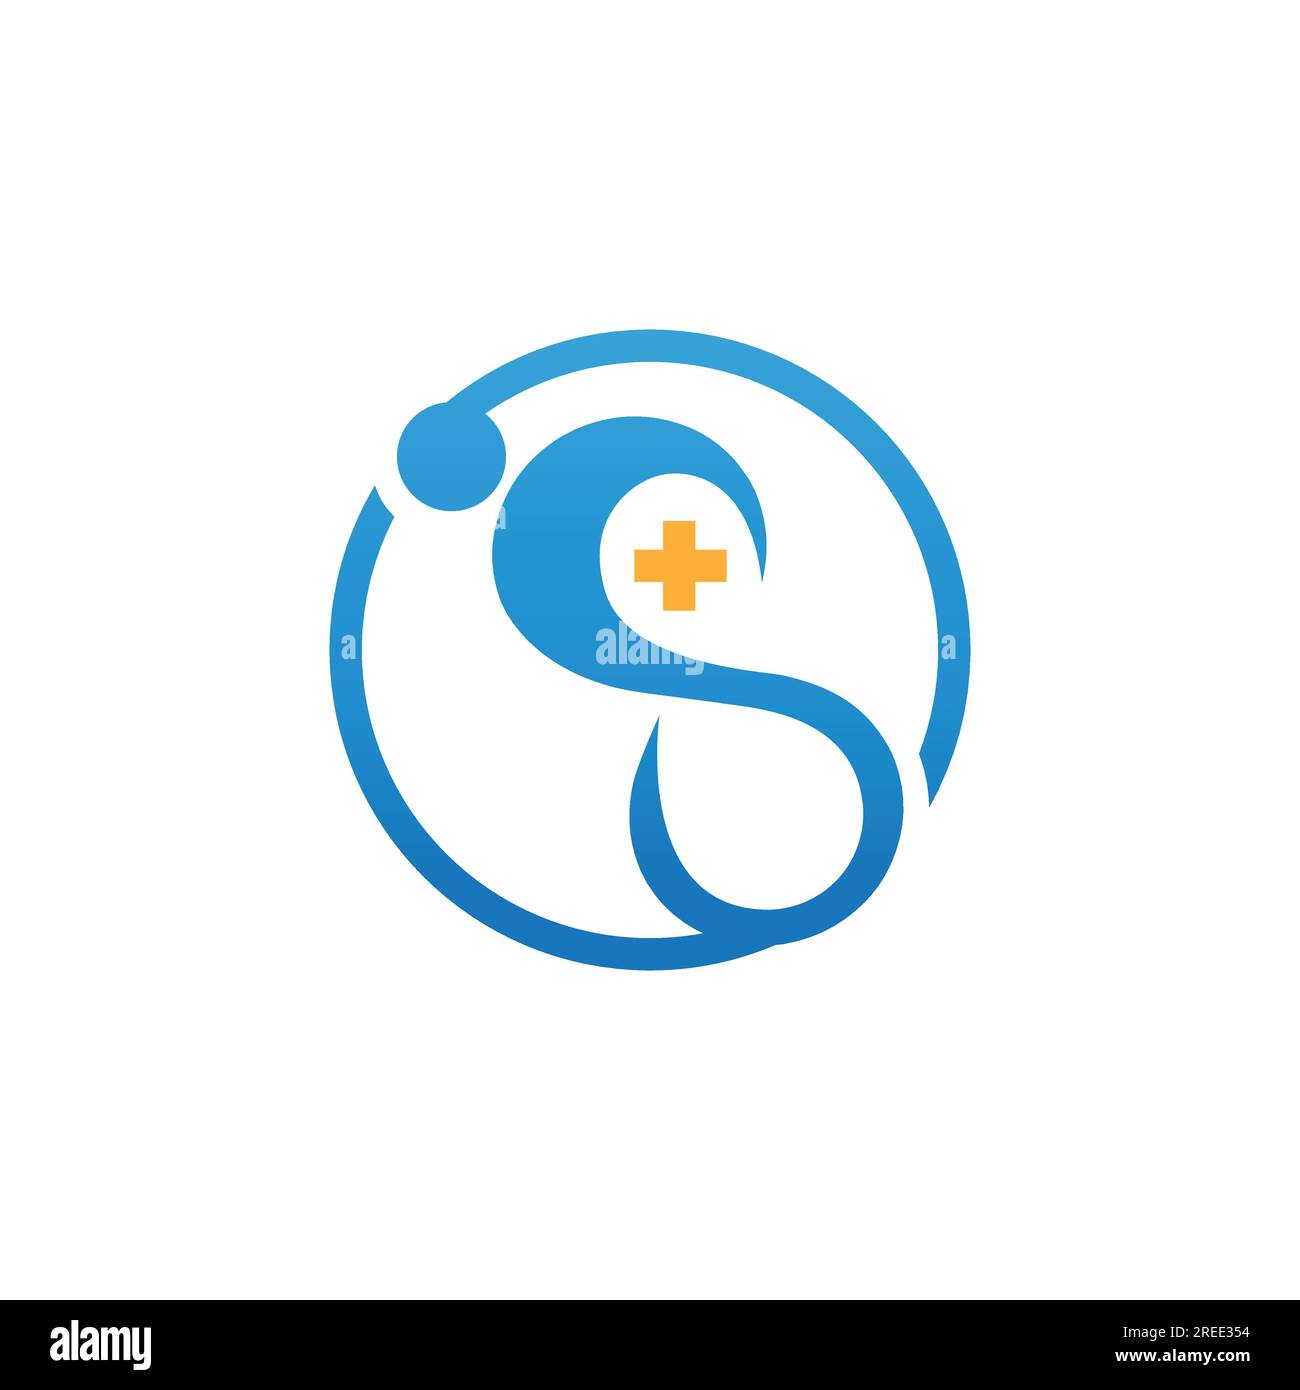 Abstract People body Health logo design design design design d'icône de symbole moderne. Image vectorielle de conception de logo médical Infinity Illustration de Vecteur